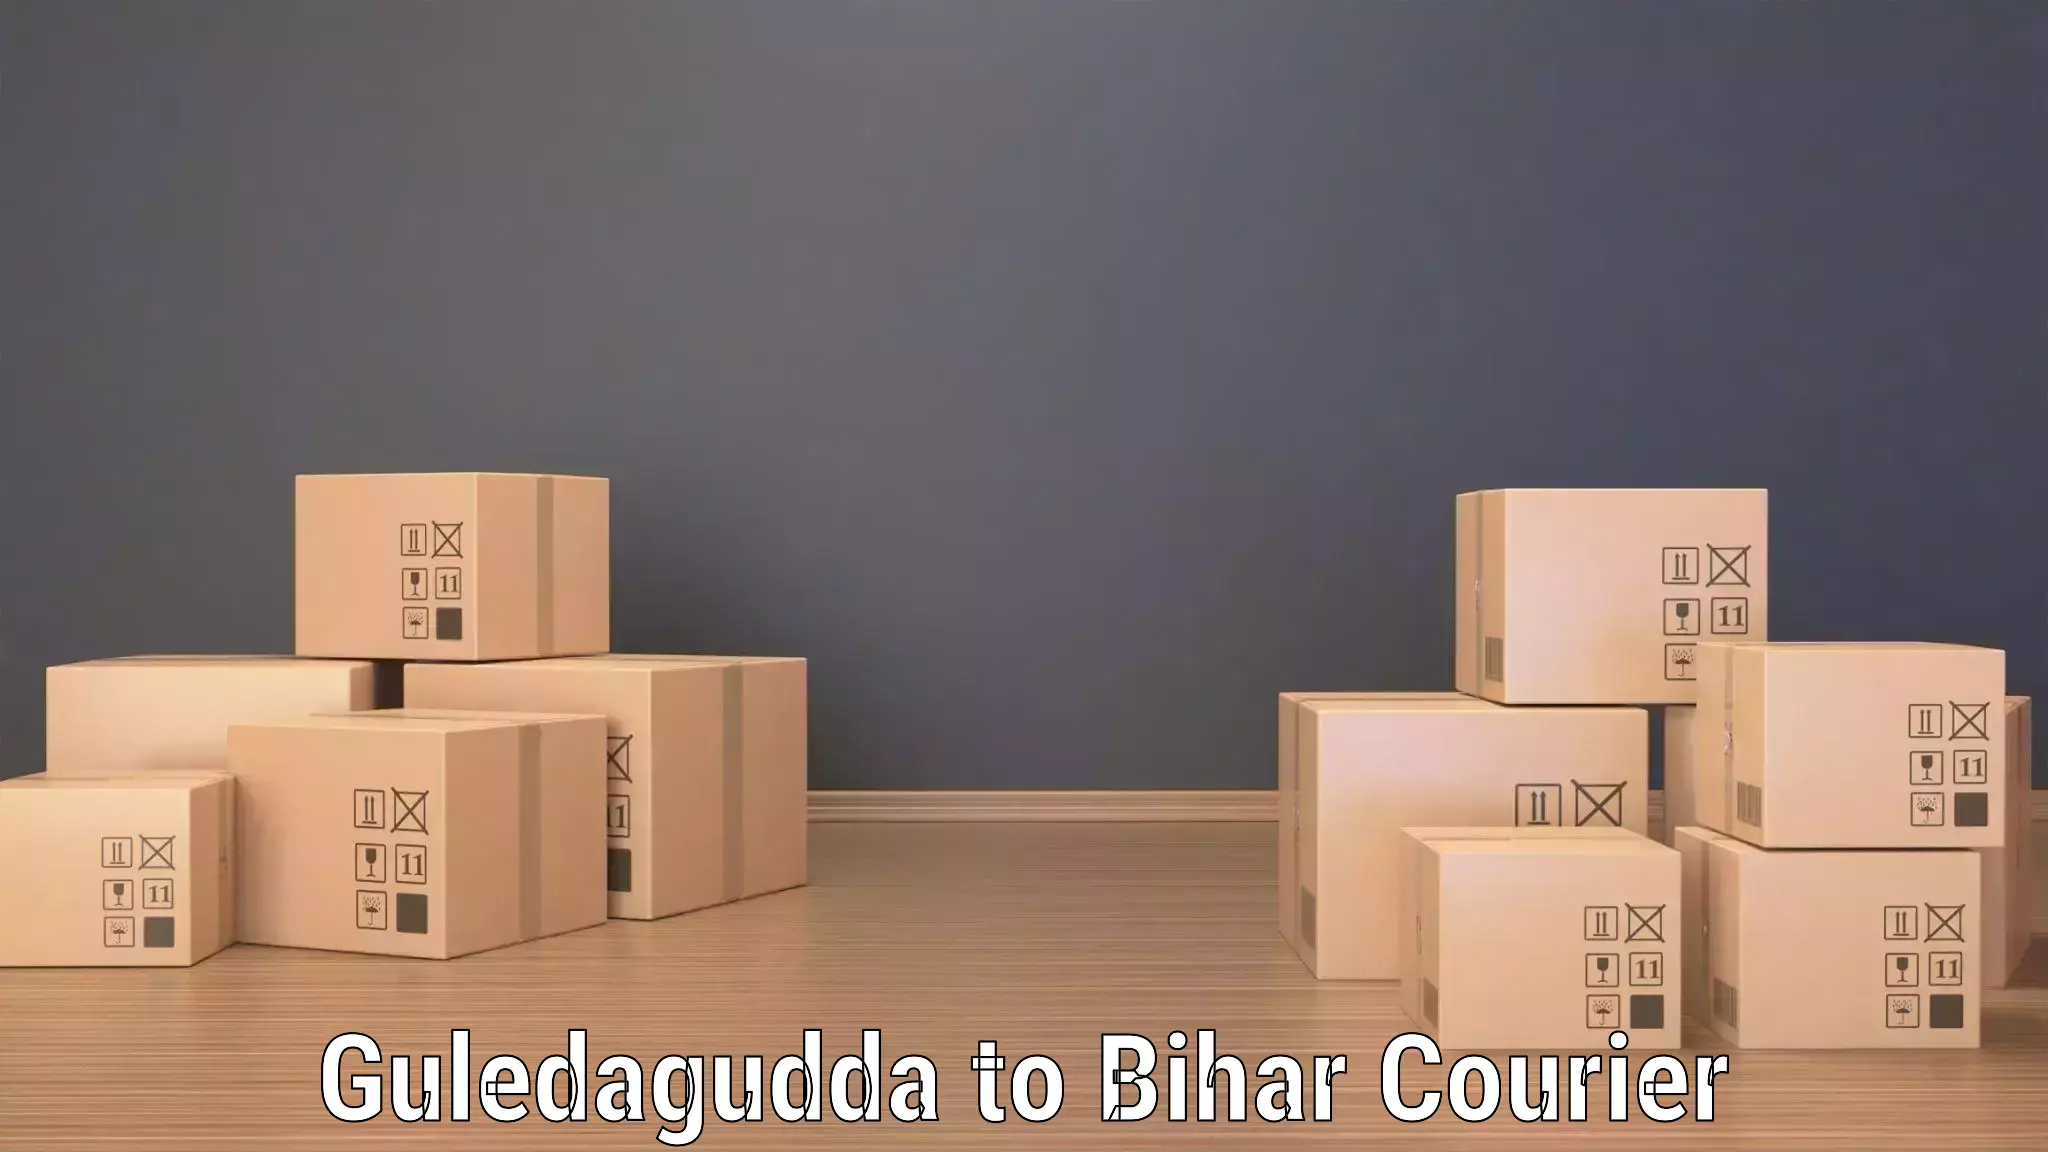 Cash on delivery service Guledagudda to Sandesh